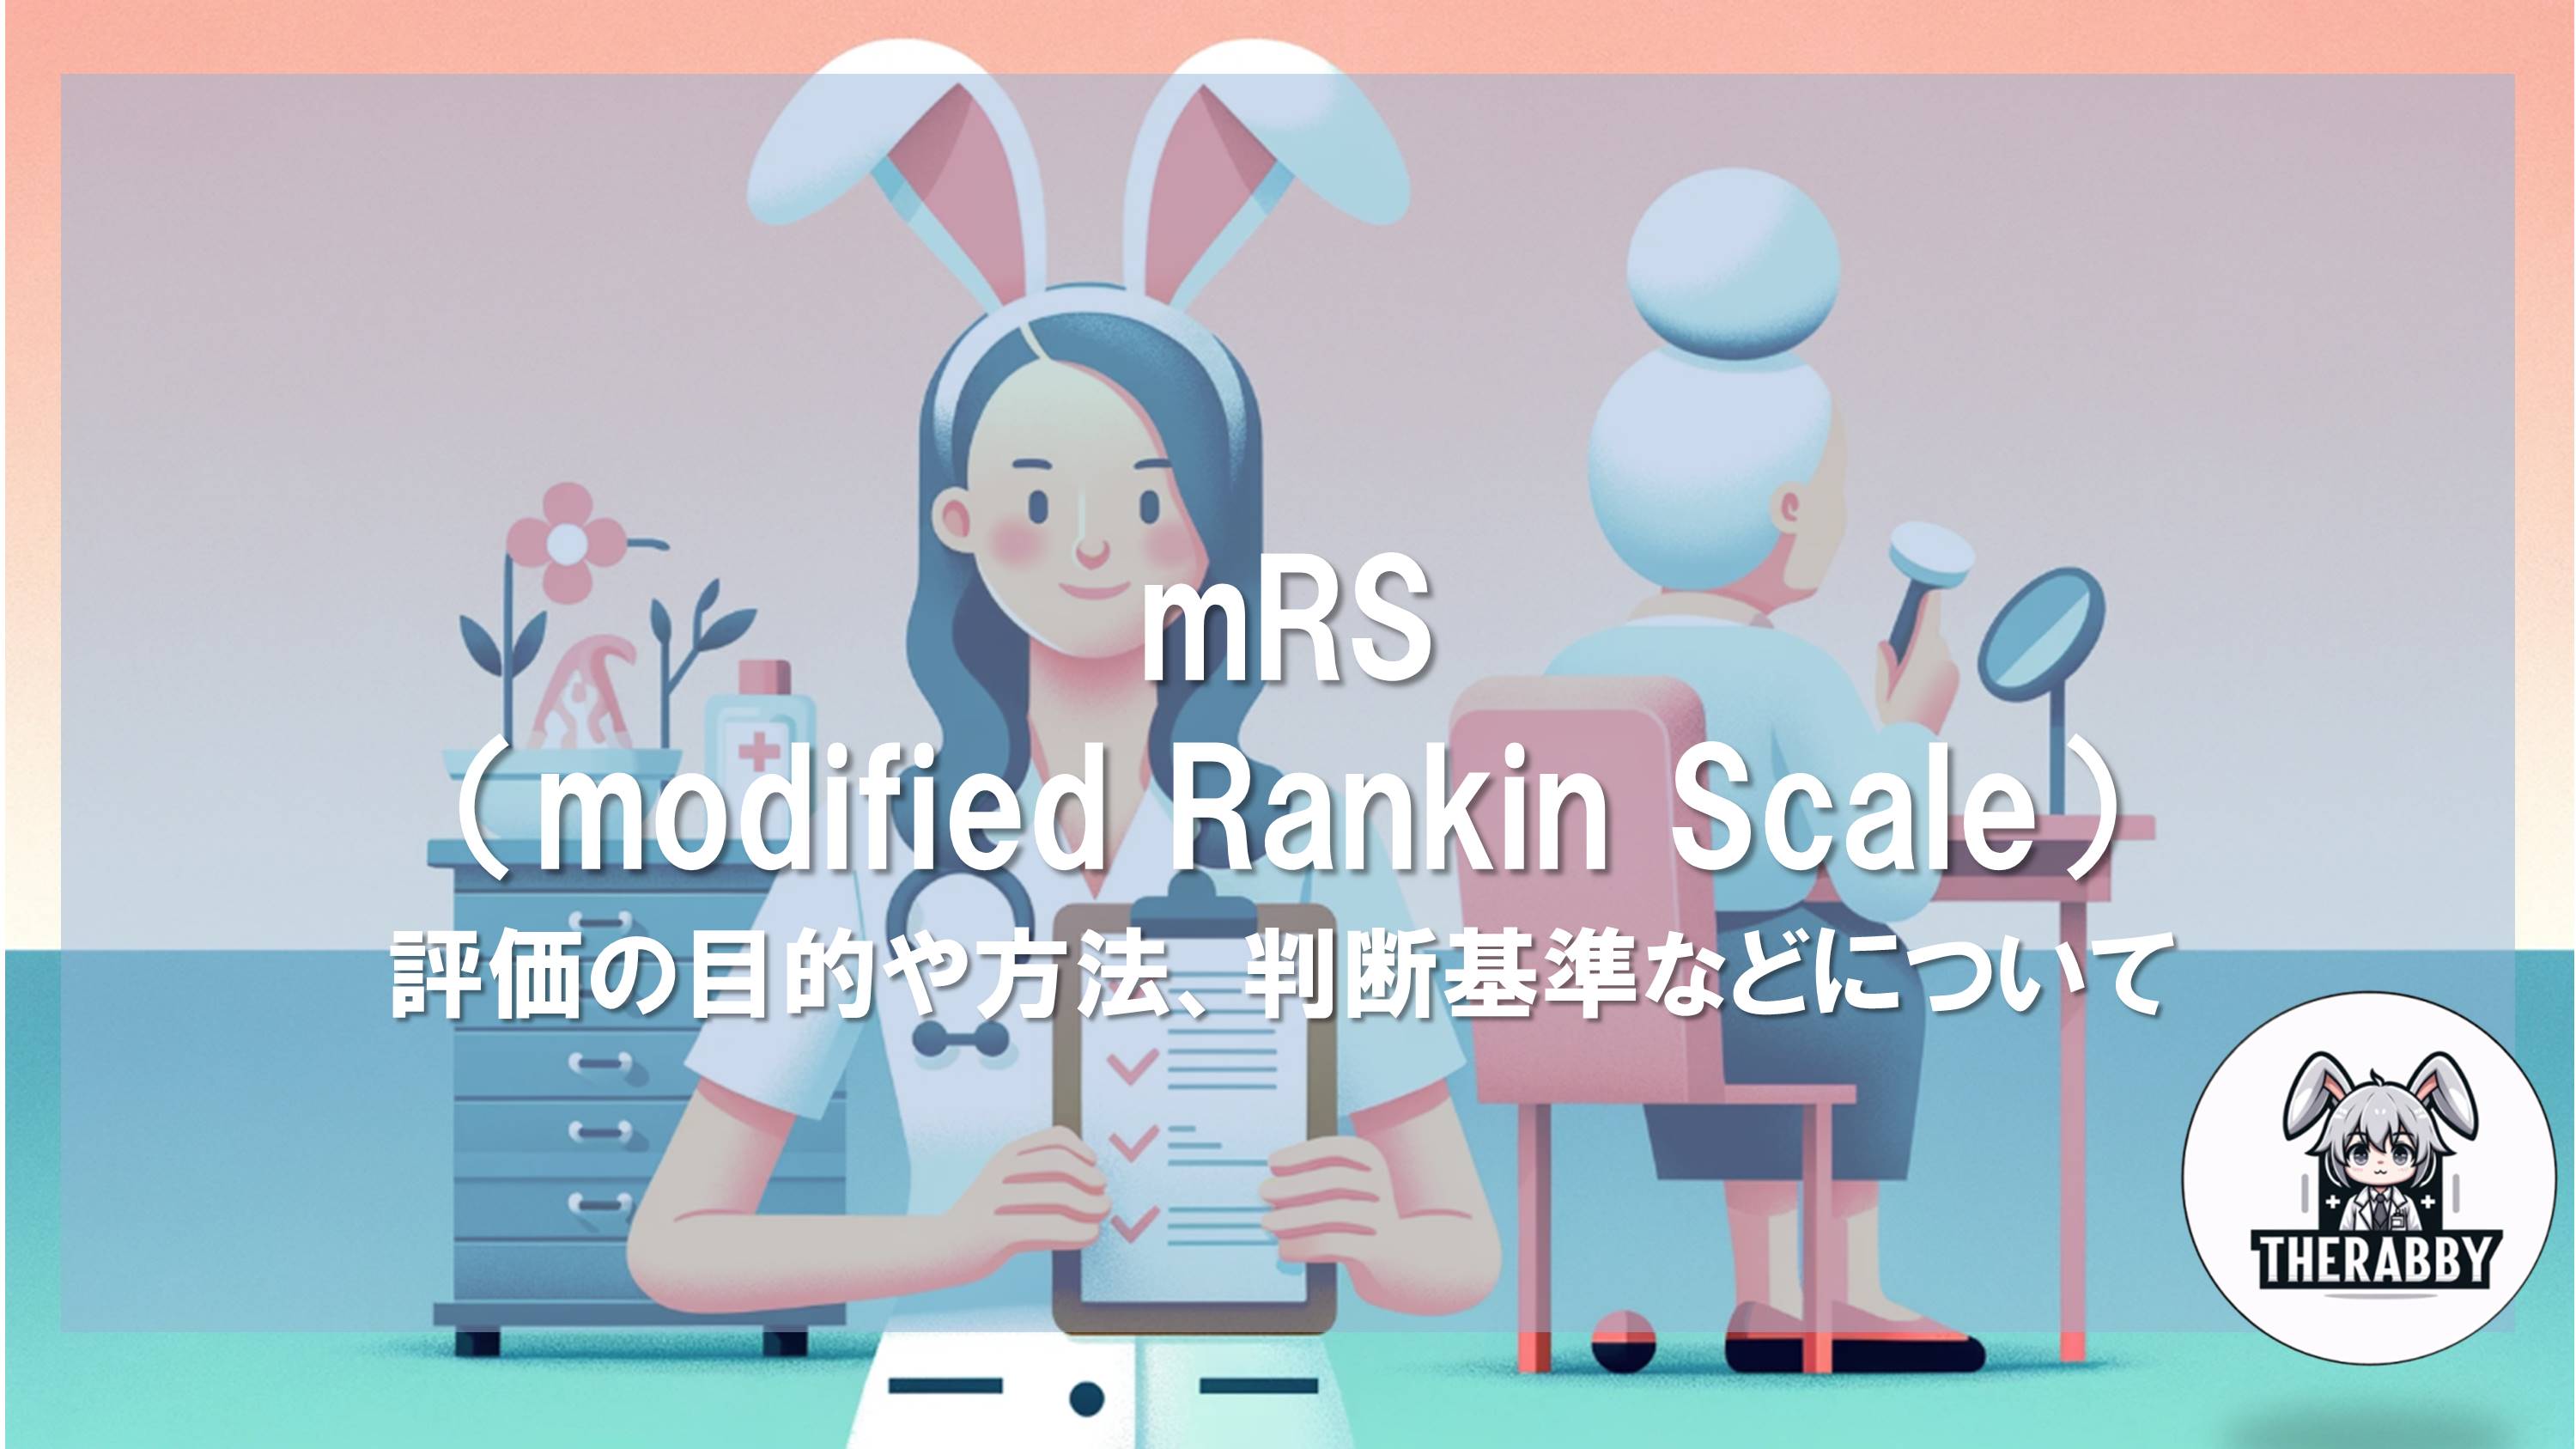 mRS（modified Rankin Scale） - 評価の目的や方法、判断基準などについて